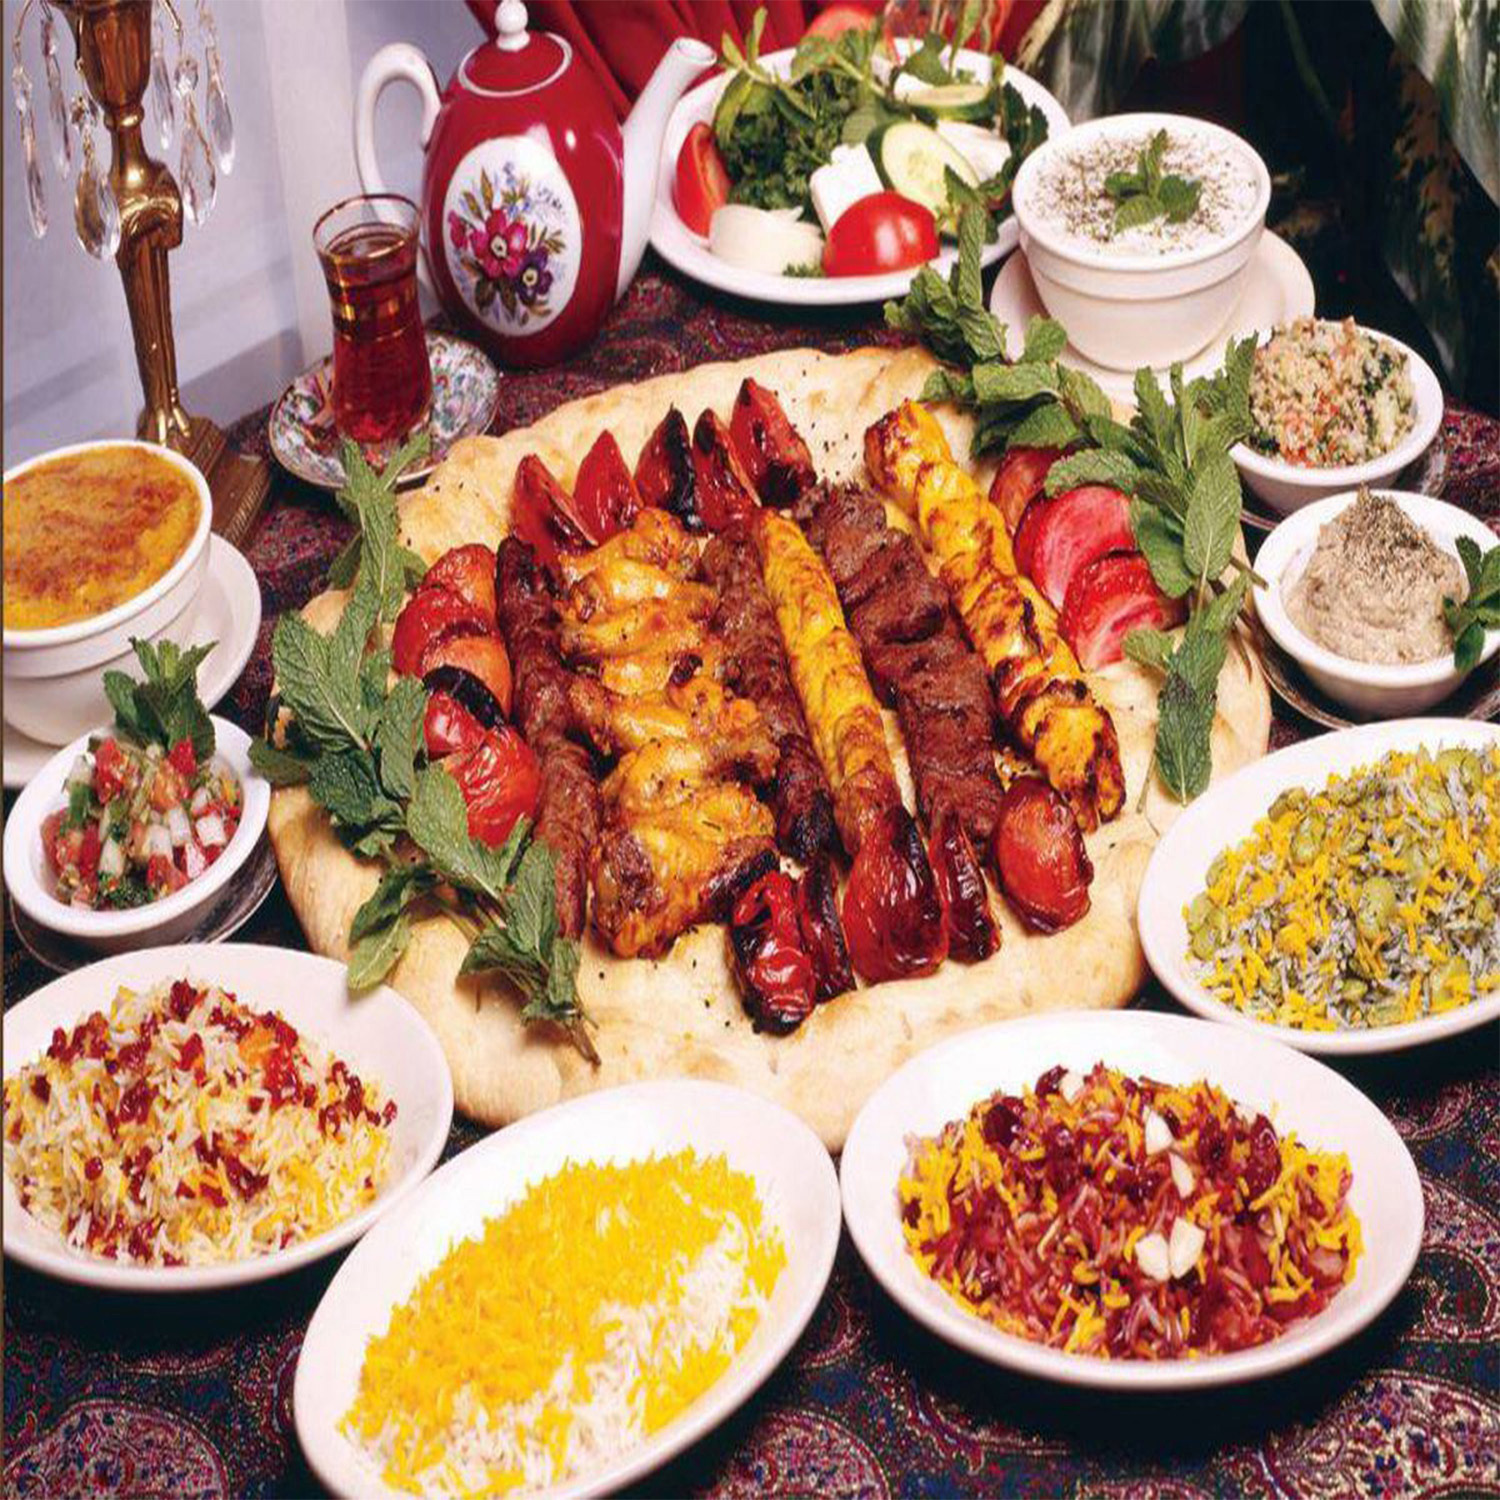 Iran Culinary tourism